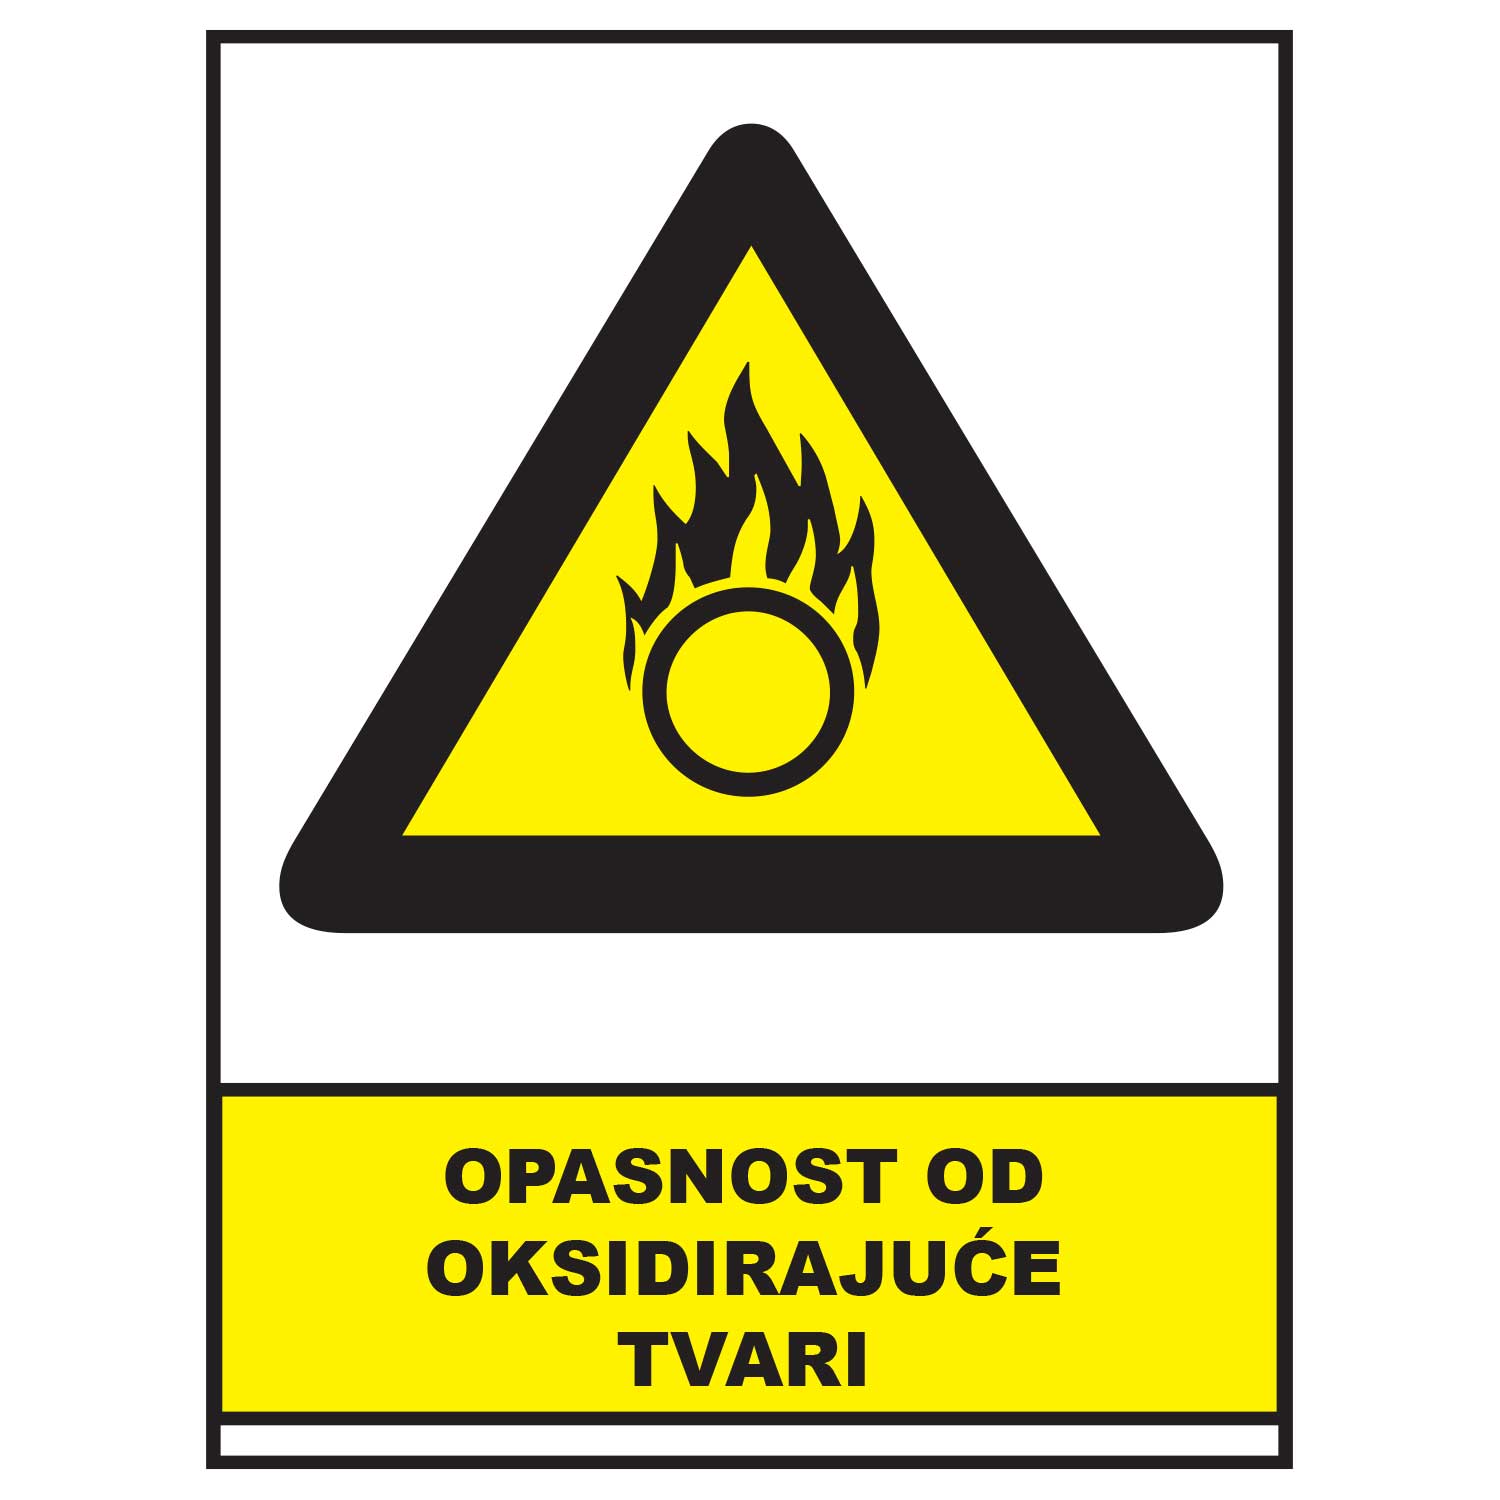 Opasnost od oksidirajuce tvari, znakovi opasnosti, ZP3003